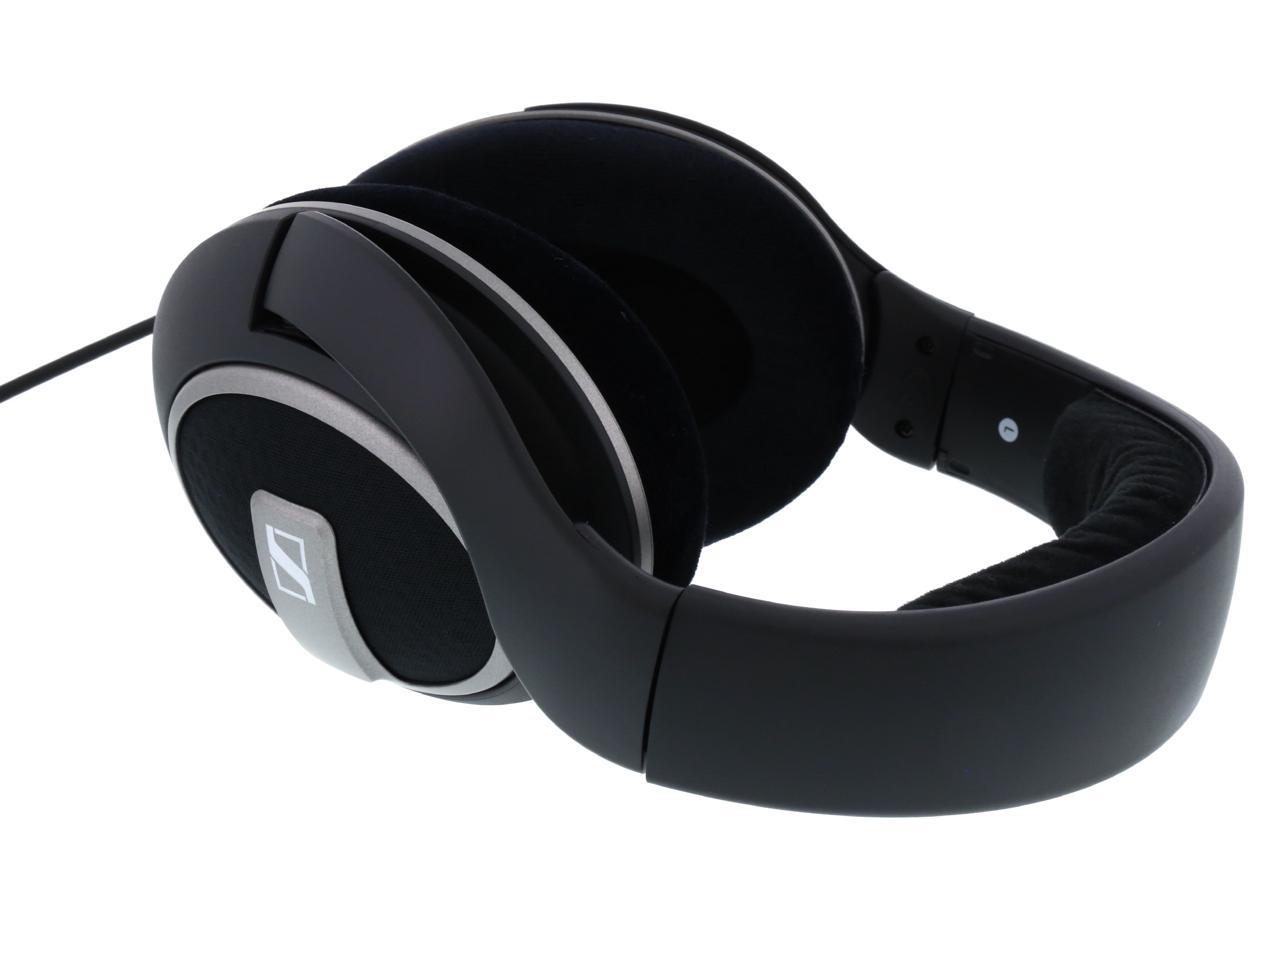 Sennheiser Hd 559 Around Ear Headphones Black Newegg Com